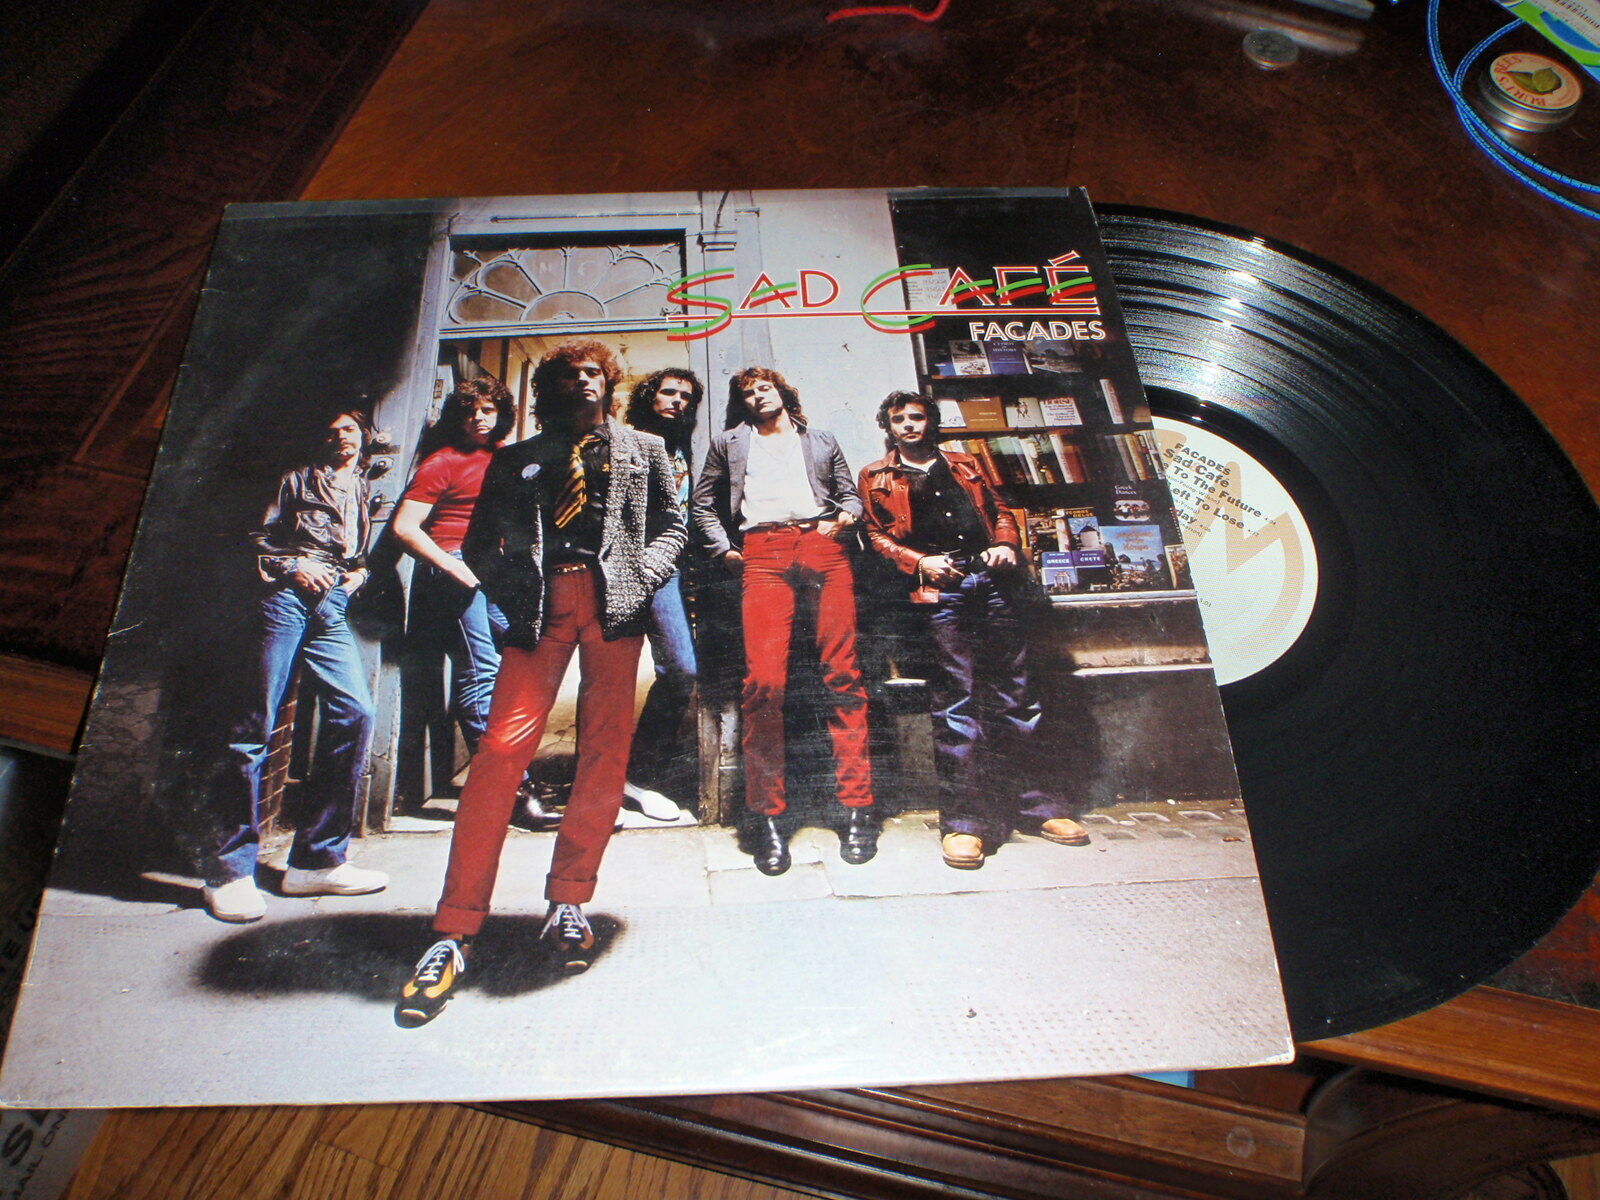 SAD CAFE LP FACADES PROMO VINYL RECORD ALBUM LP SP4779